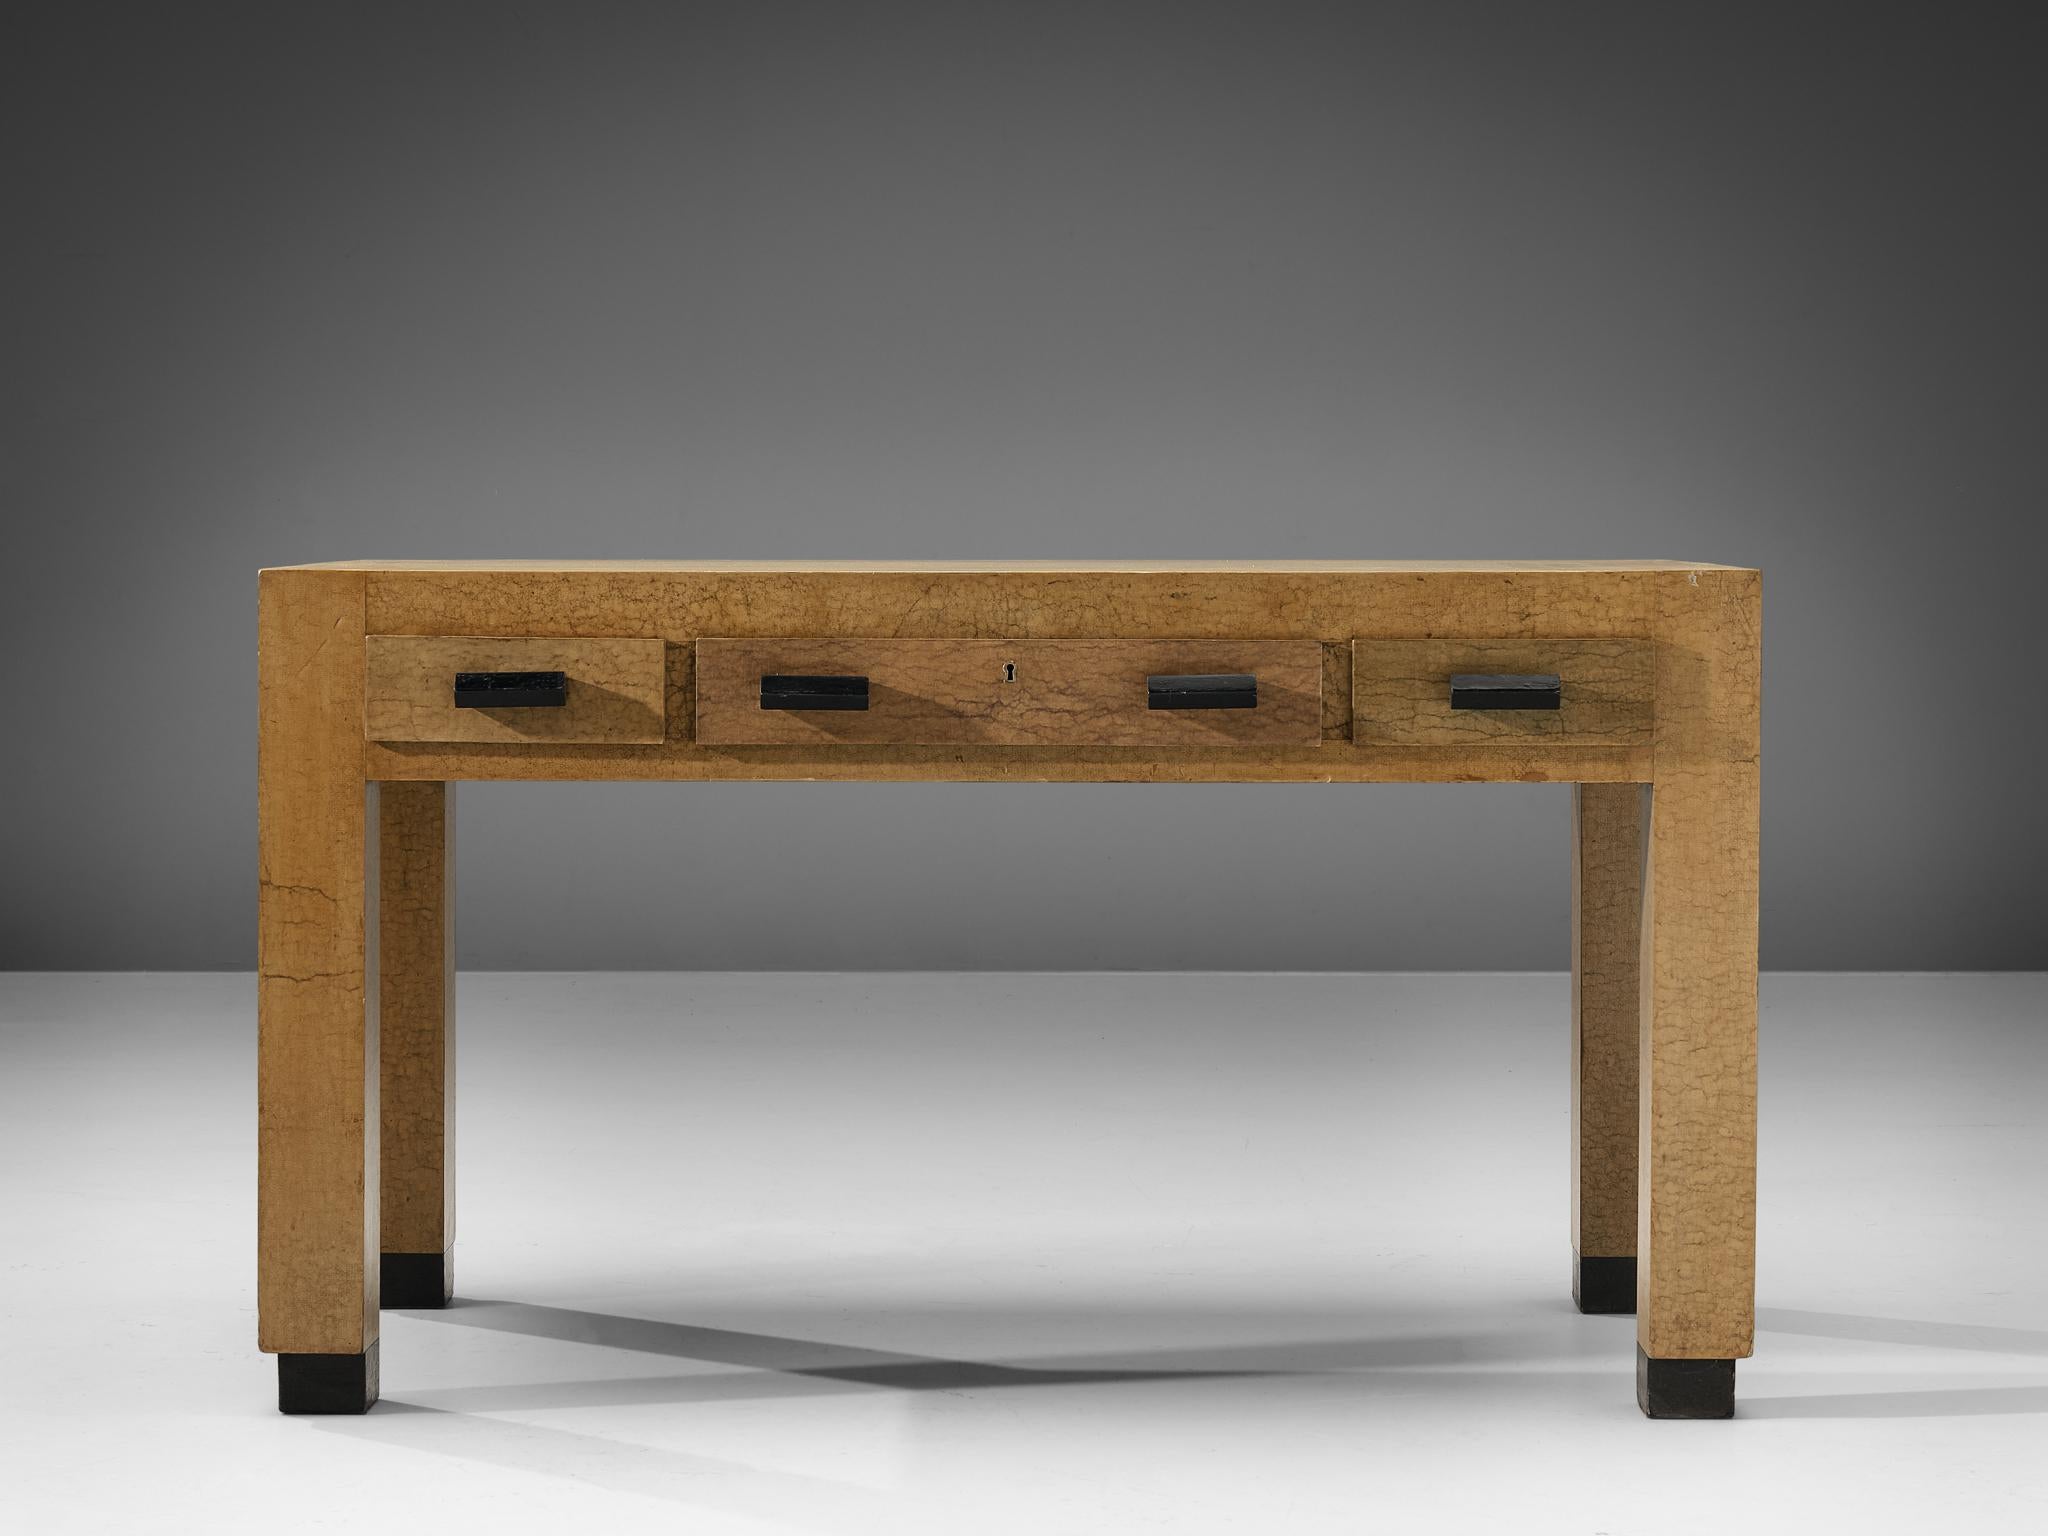 Giuseppe Pagano-Pogatschnig and Gino Levi Montalcini Desk in Wood and Buxus  2